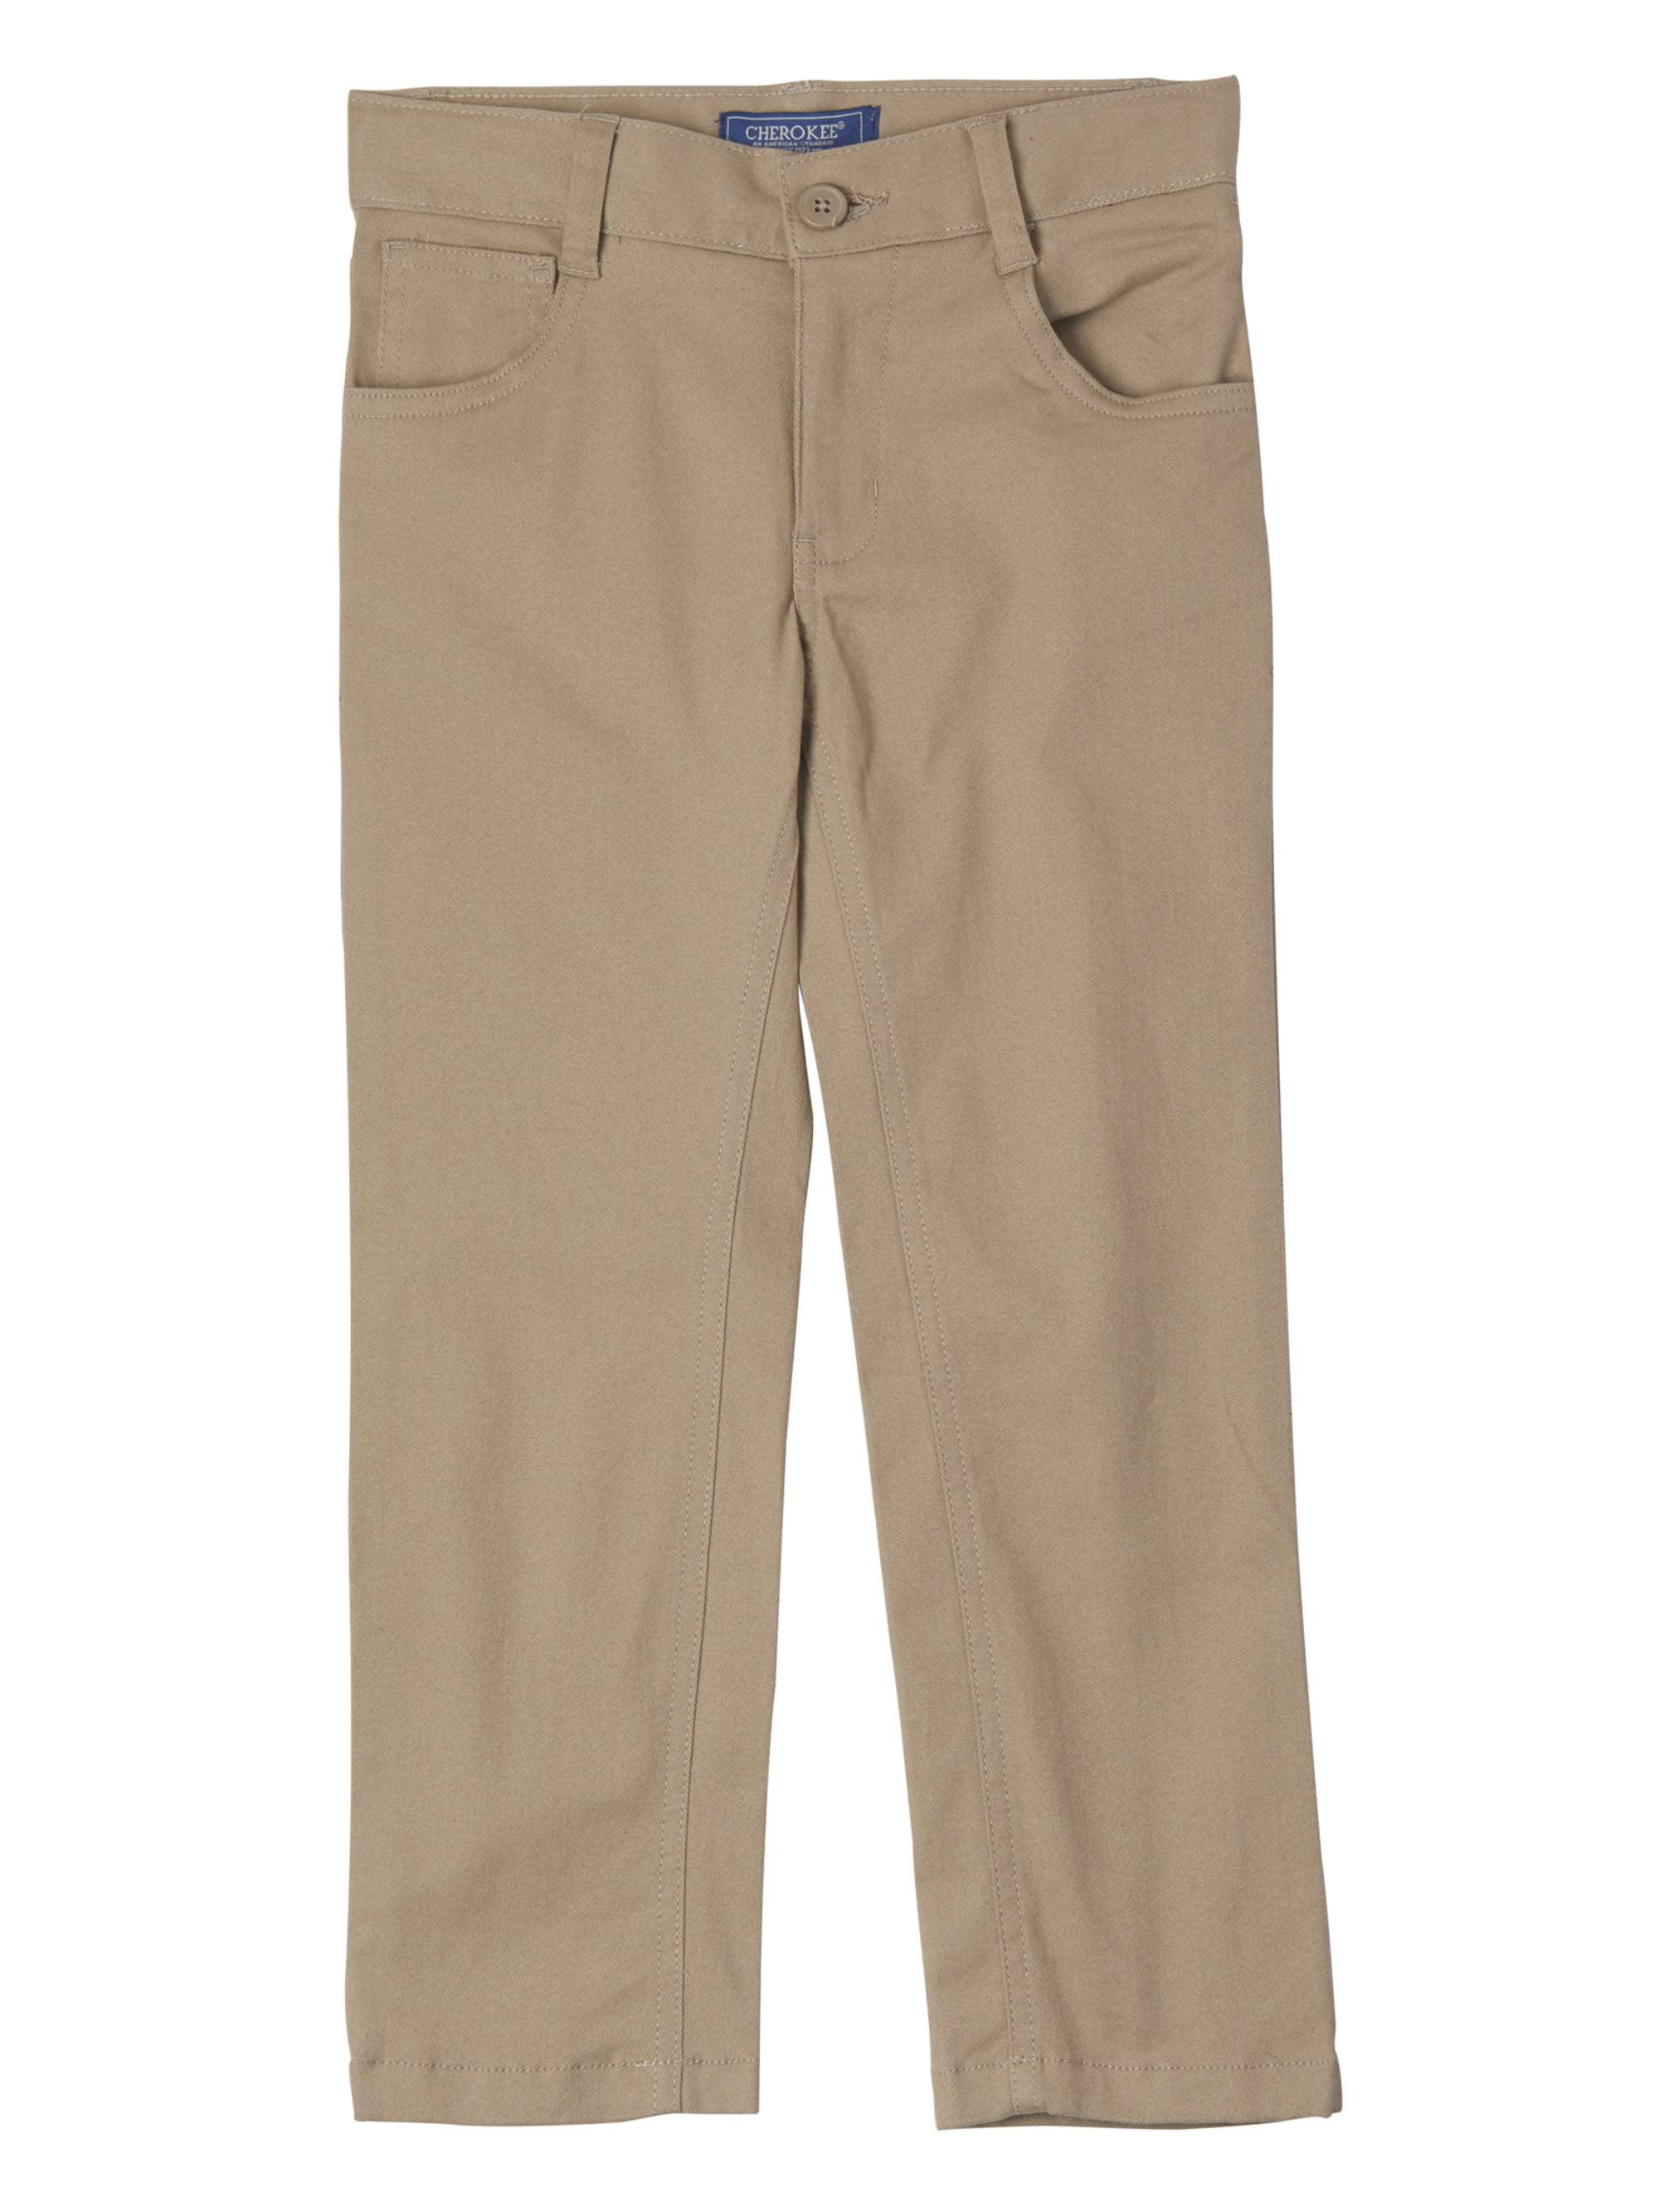 Cherokee Boys Uniform Twill-Modern Fit Pant with Adjustable Waist